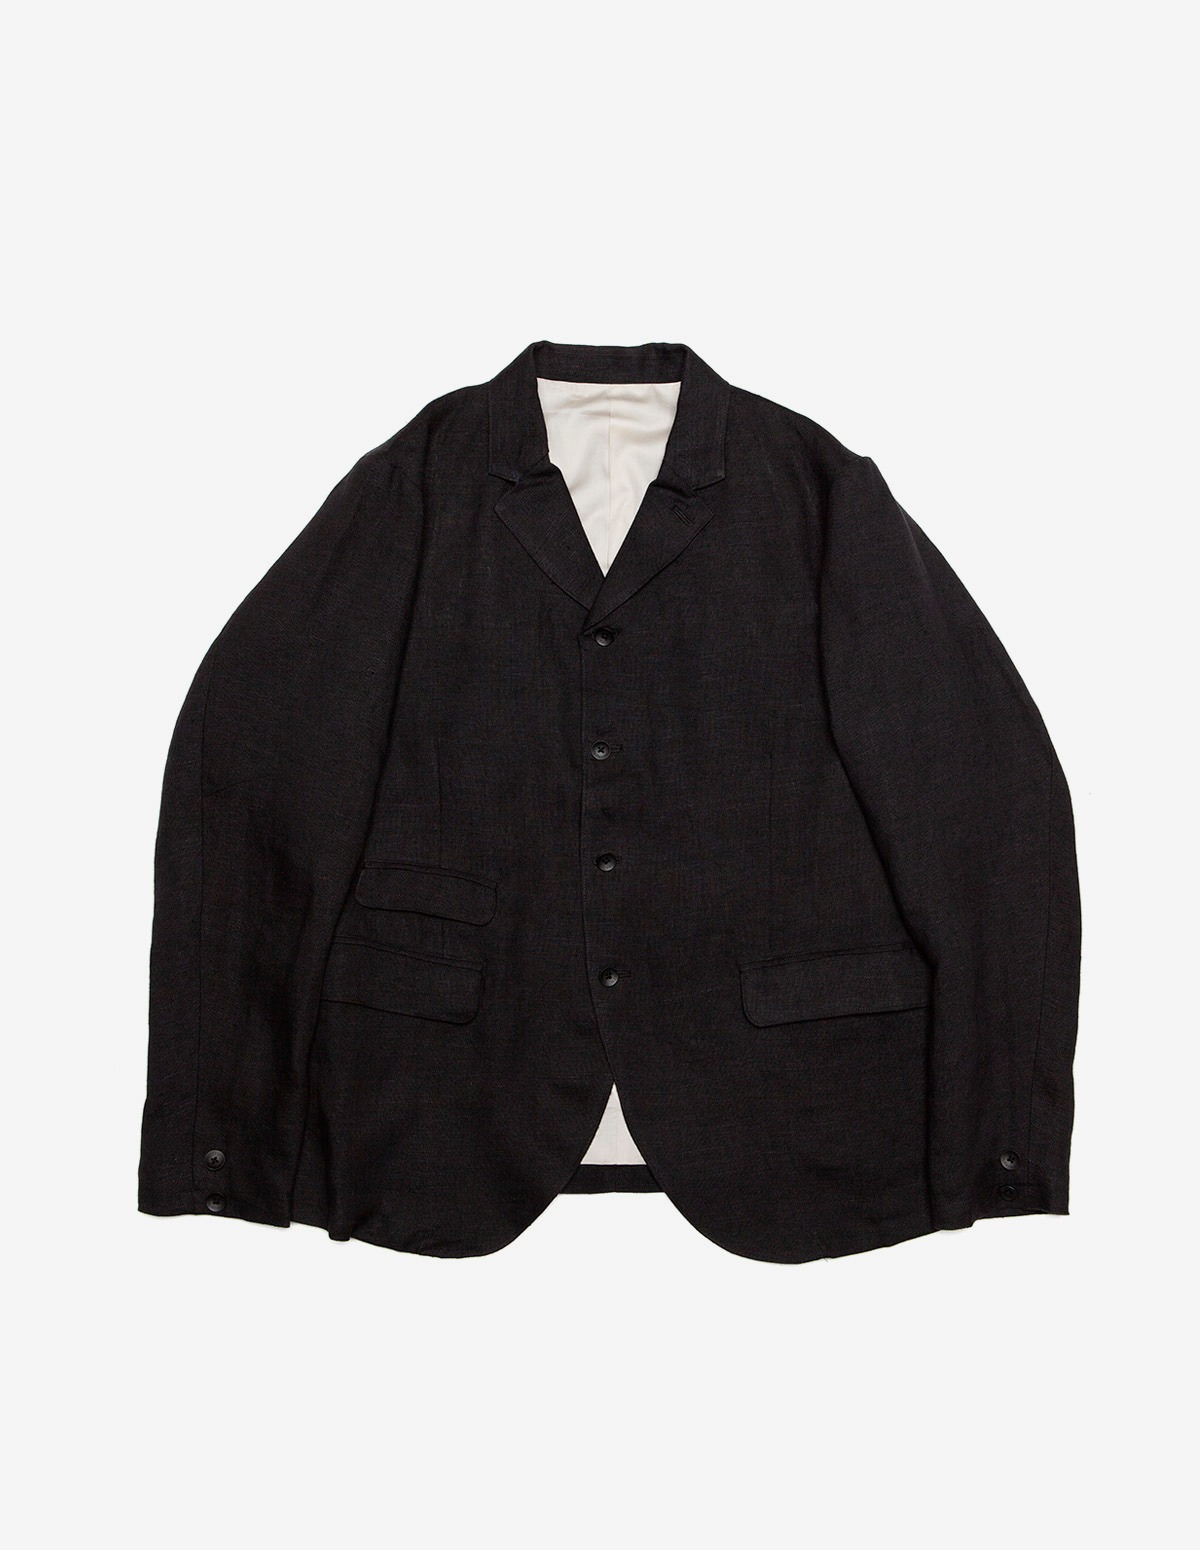 OR-4226A Black Linen Jacket